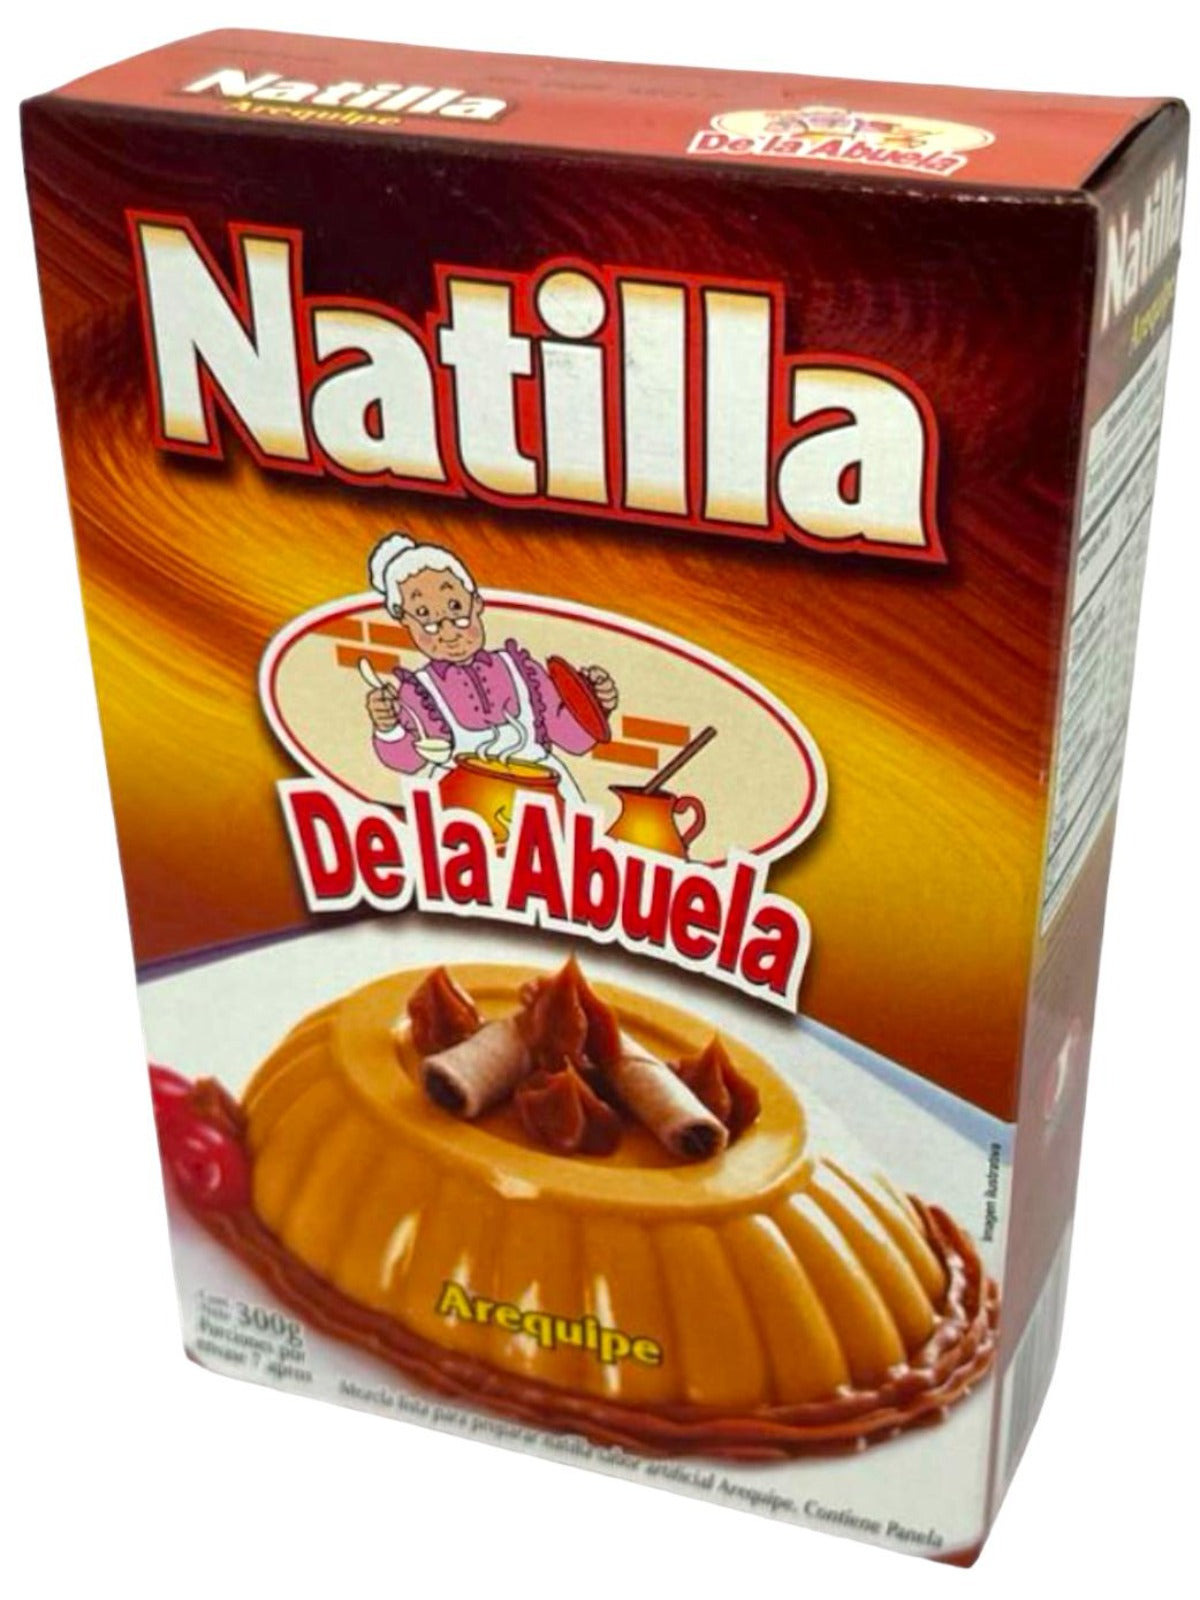 De la Abuela Natilla Arequipe Colombian Caramel Pudding 300g ea 4 Pack 1200g Total